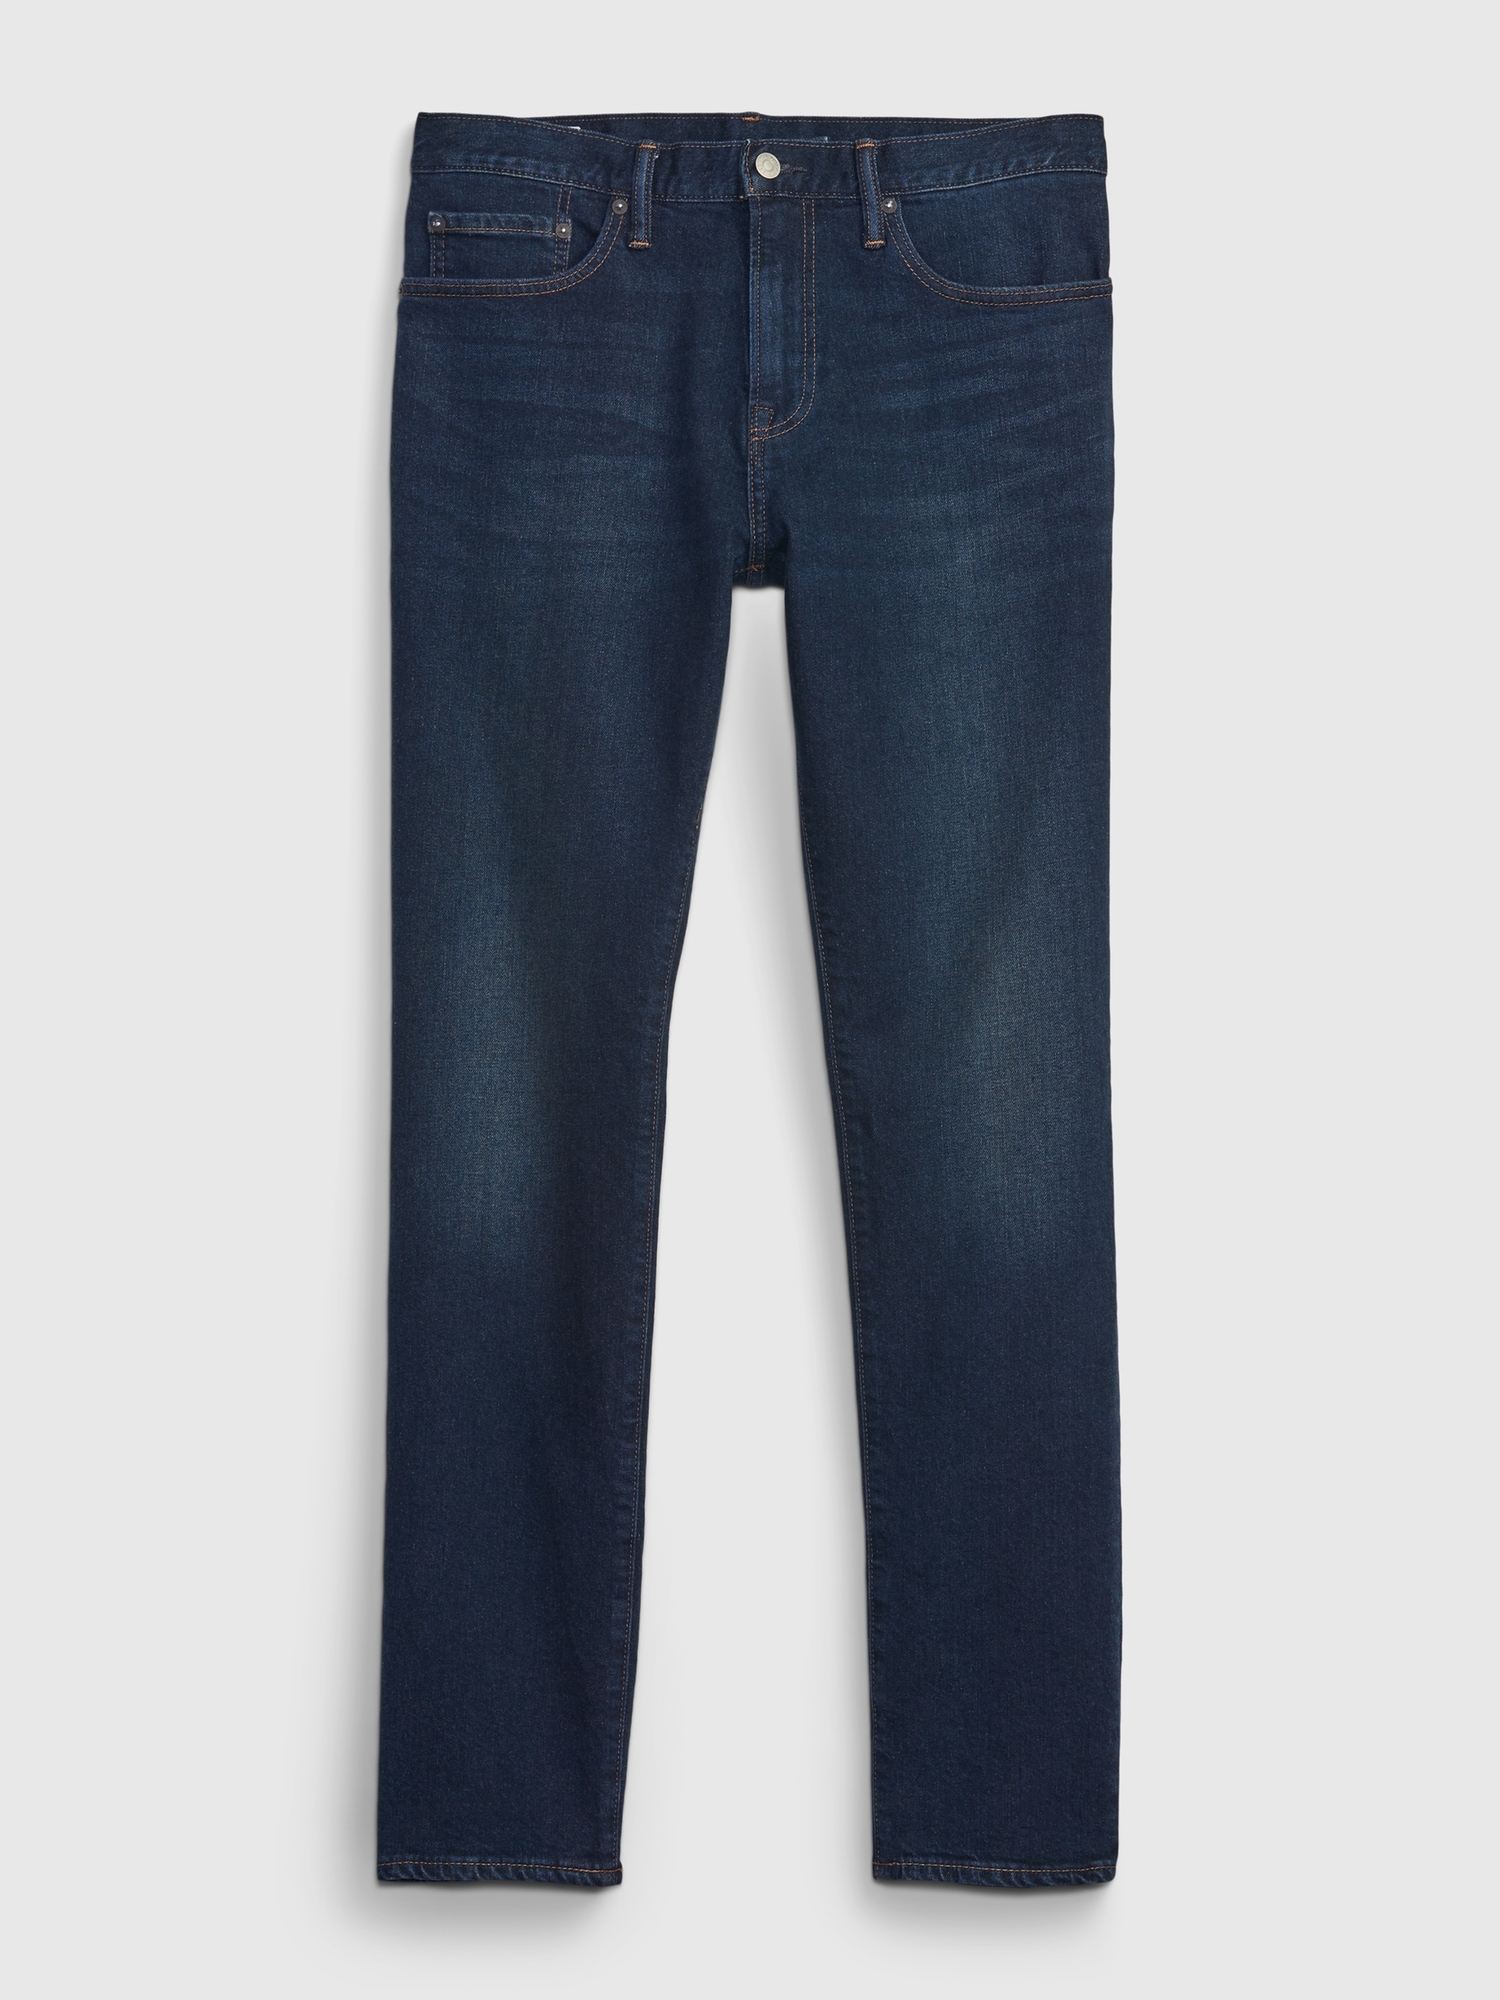 Gap Slim Jeans in GapFlex - ShopStyle